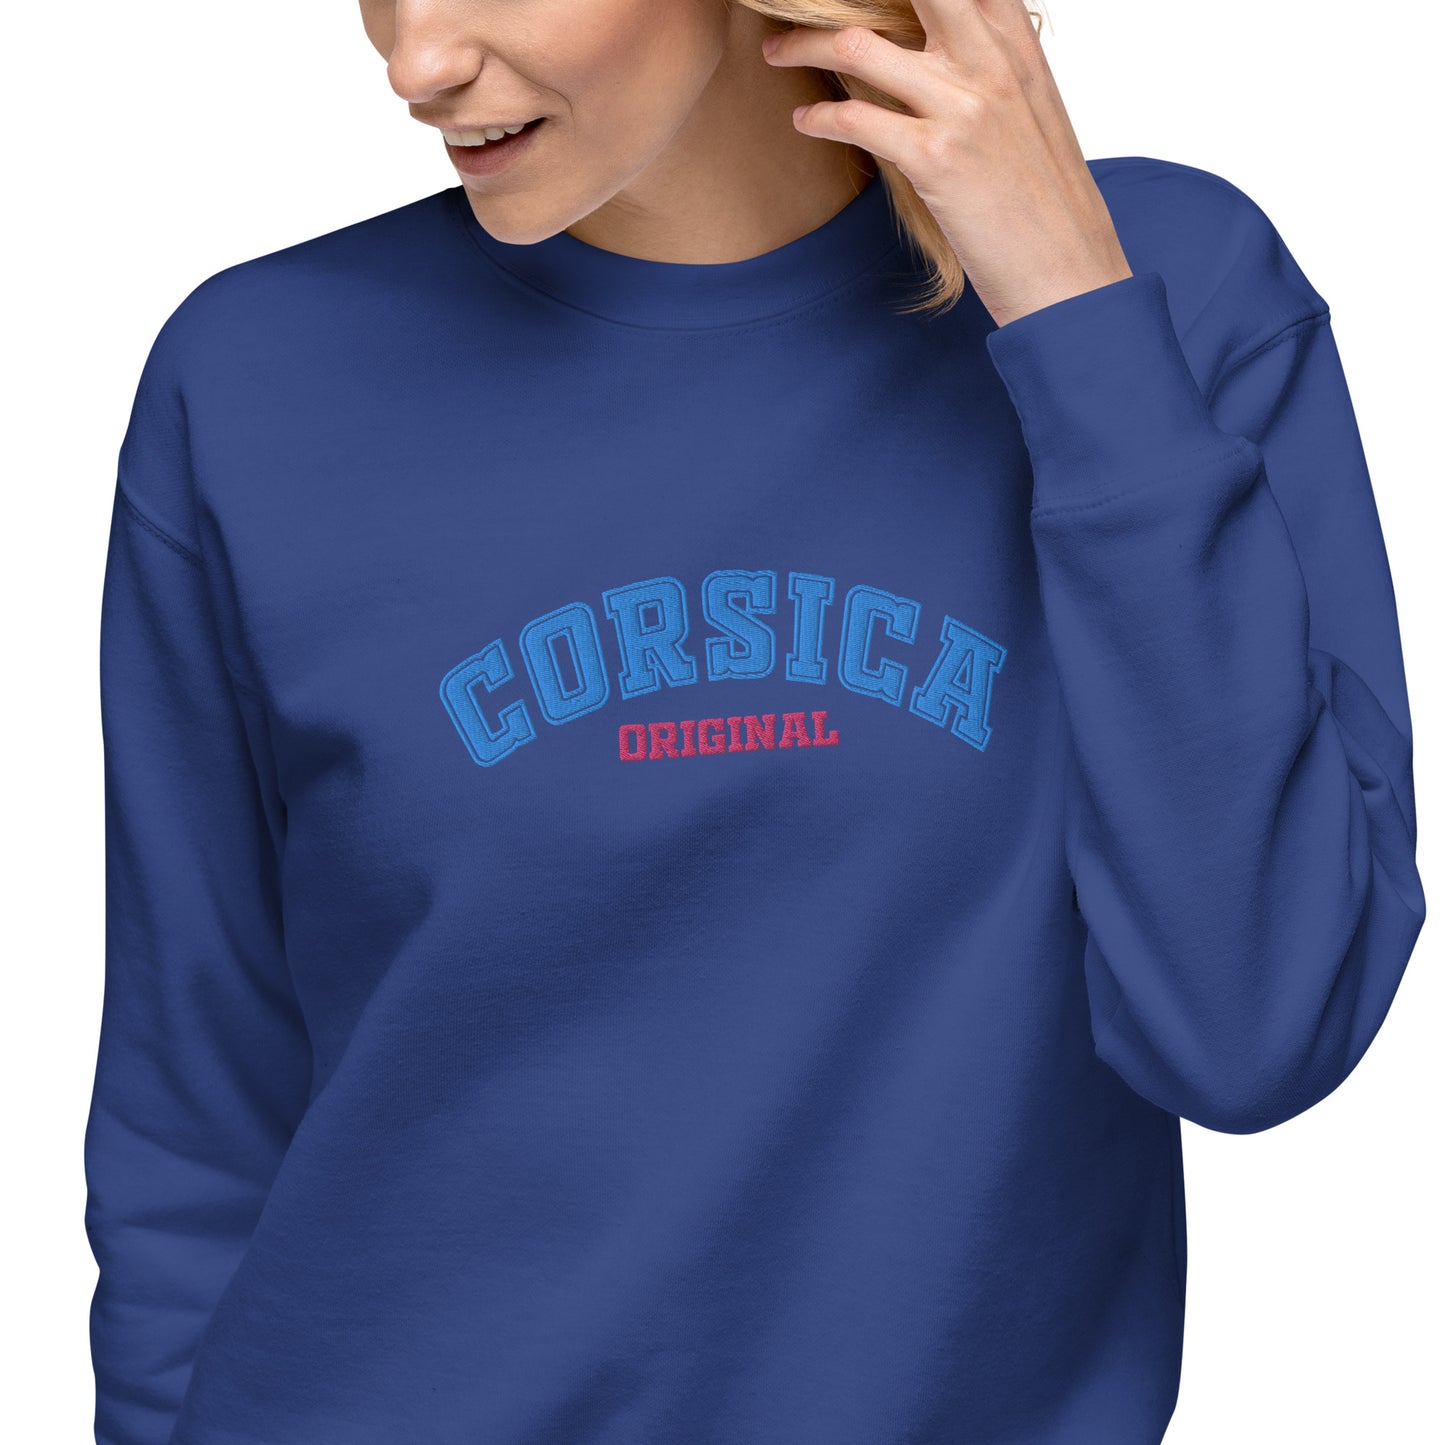 Sweatshirt premium Brodé Corsica Original